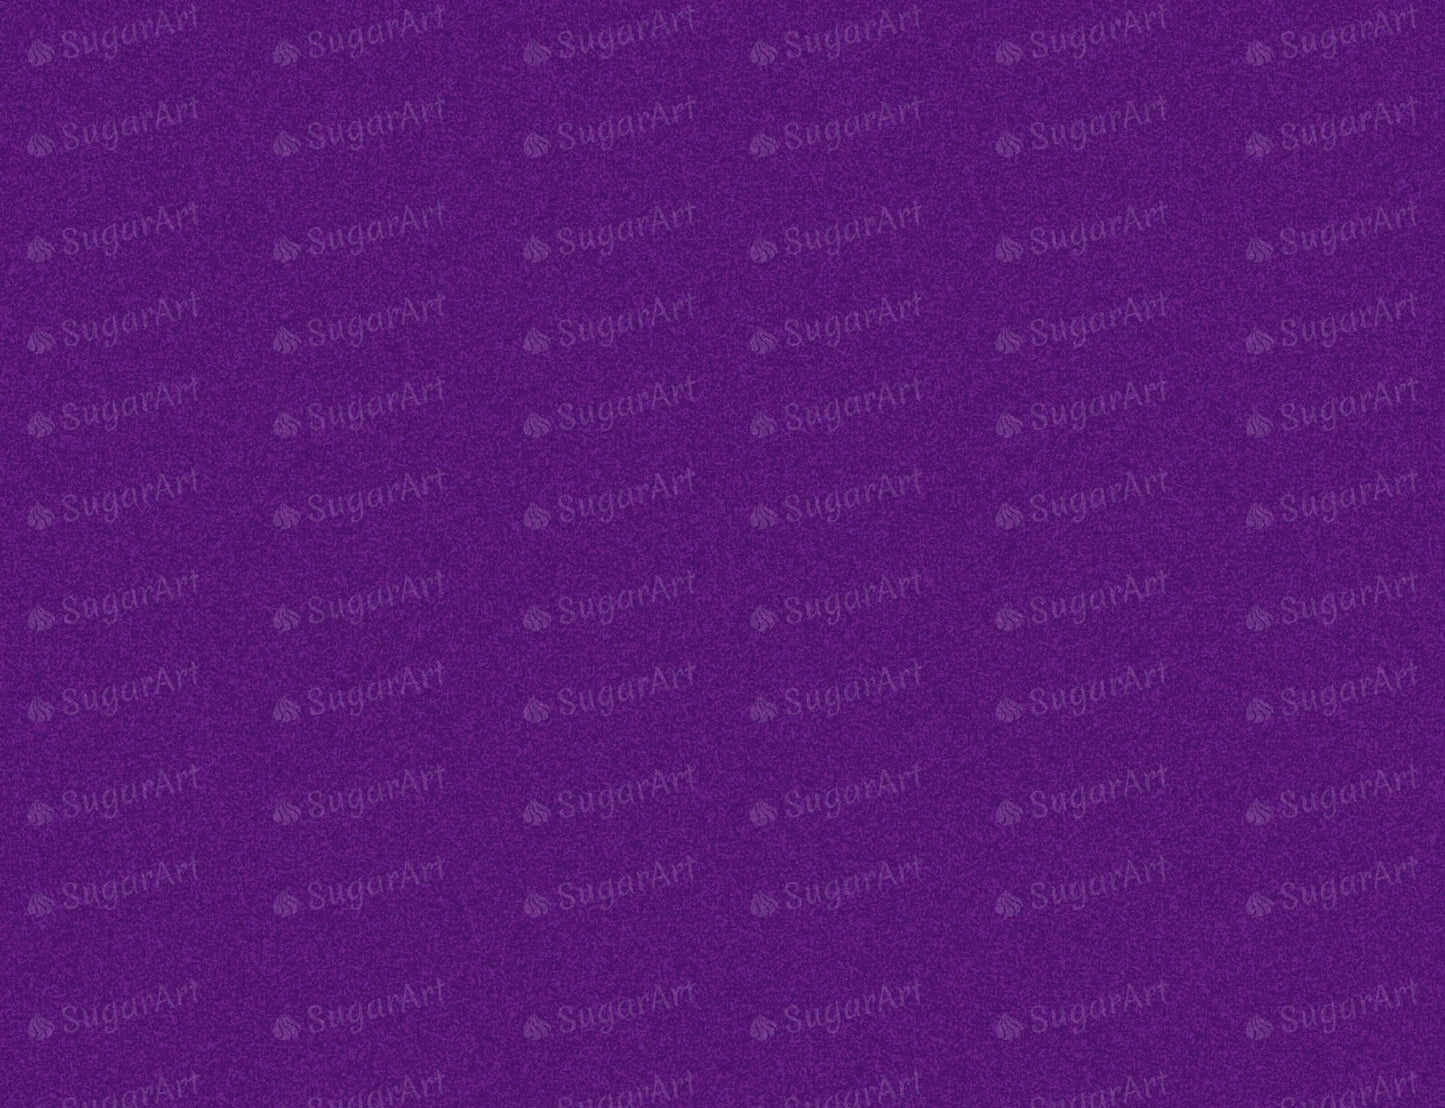 Purple Iris - Edible Fabric - EF009.